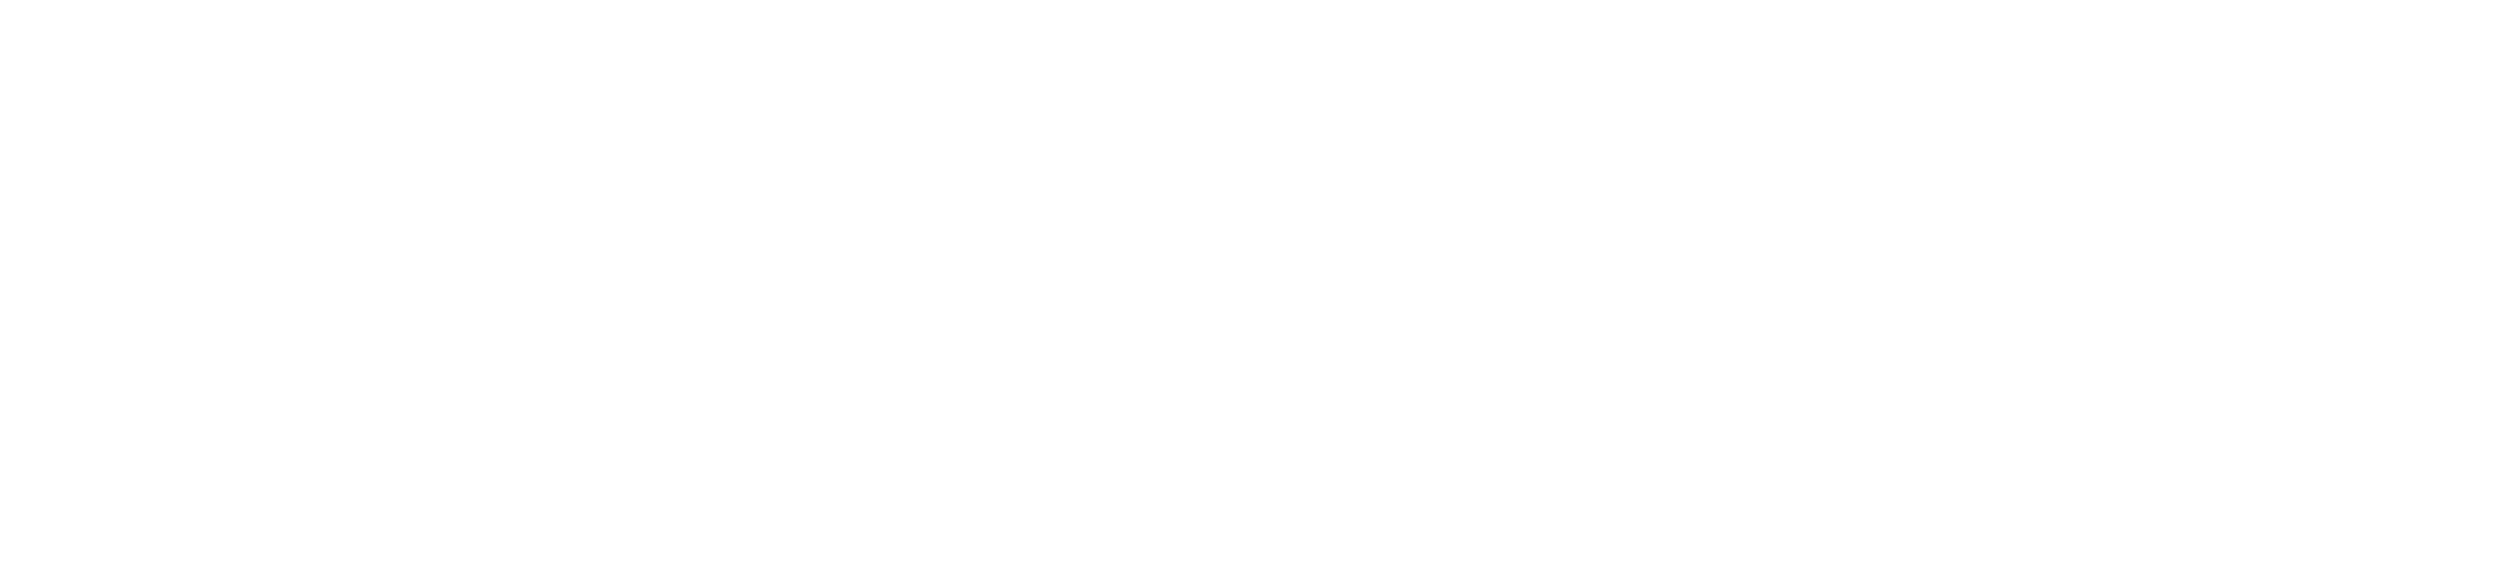 quicktarget logo white_black-03